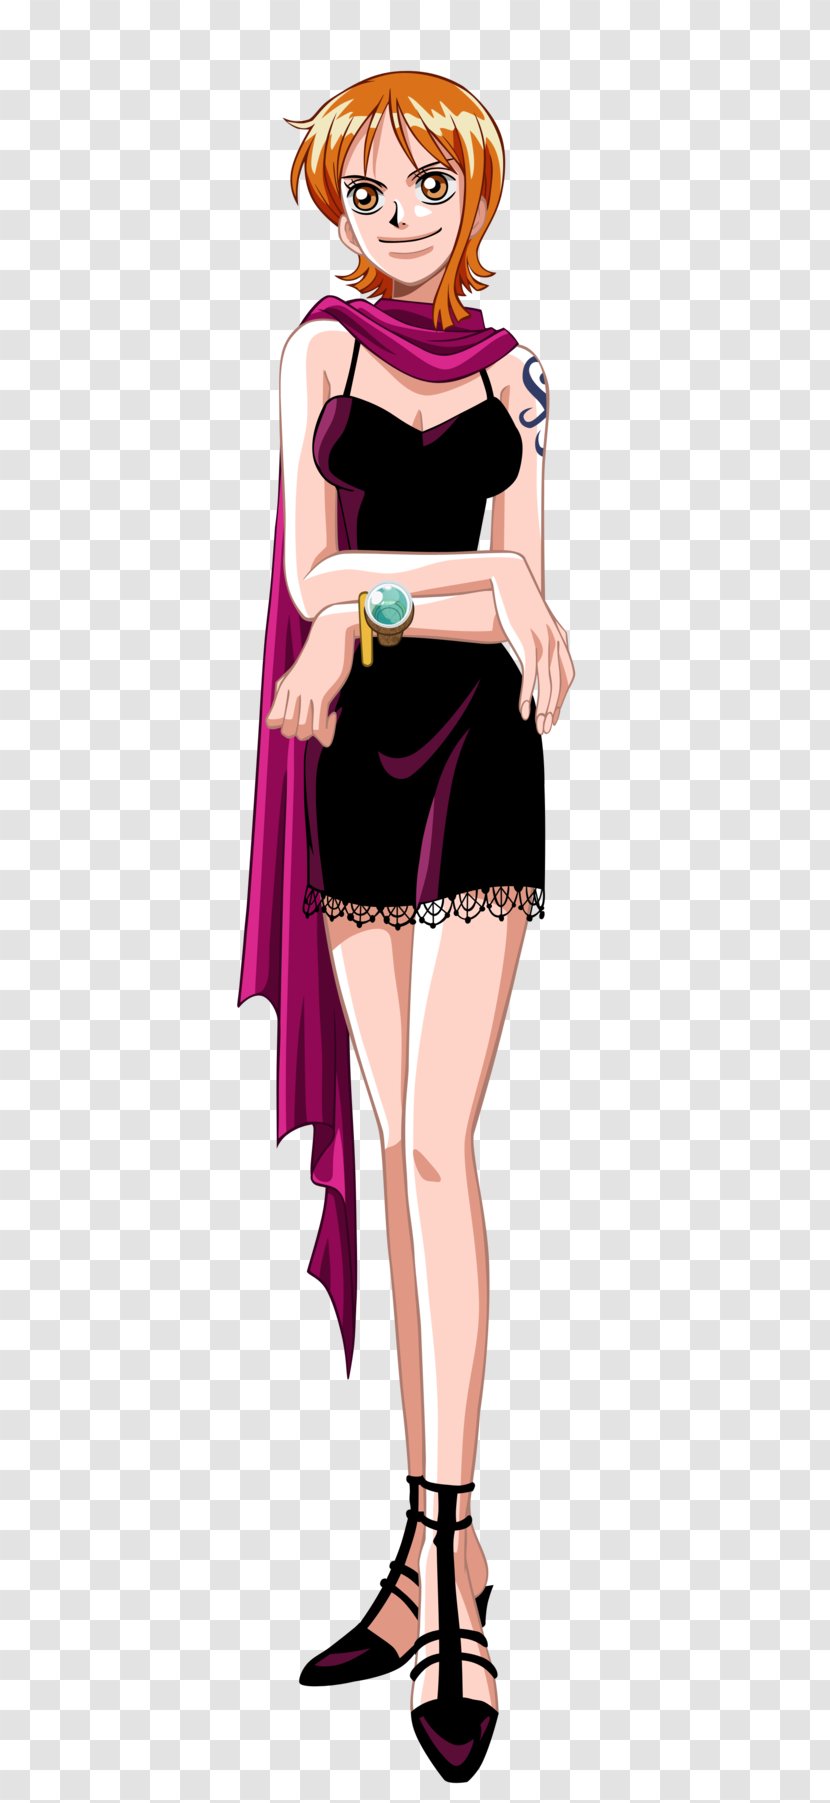 Nami Monkey D. Luffy Nico Robin Roronoa Zoro Dress - Cartoon - One Piece Transparent PNG